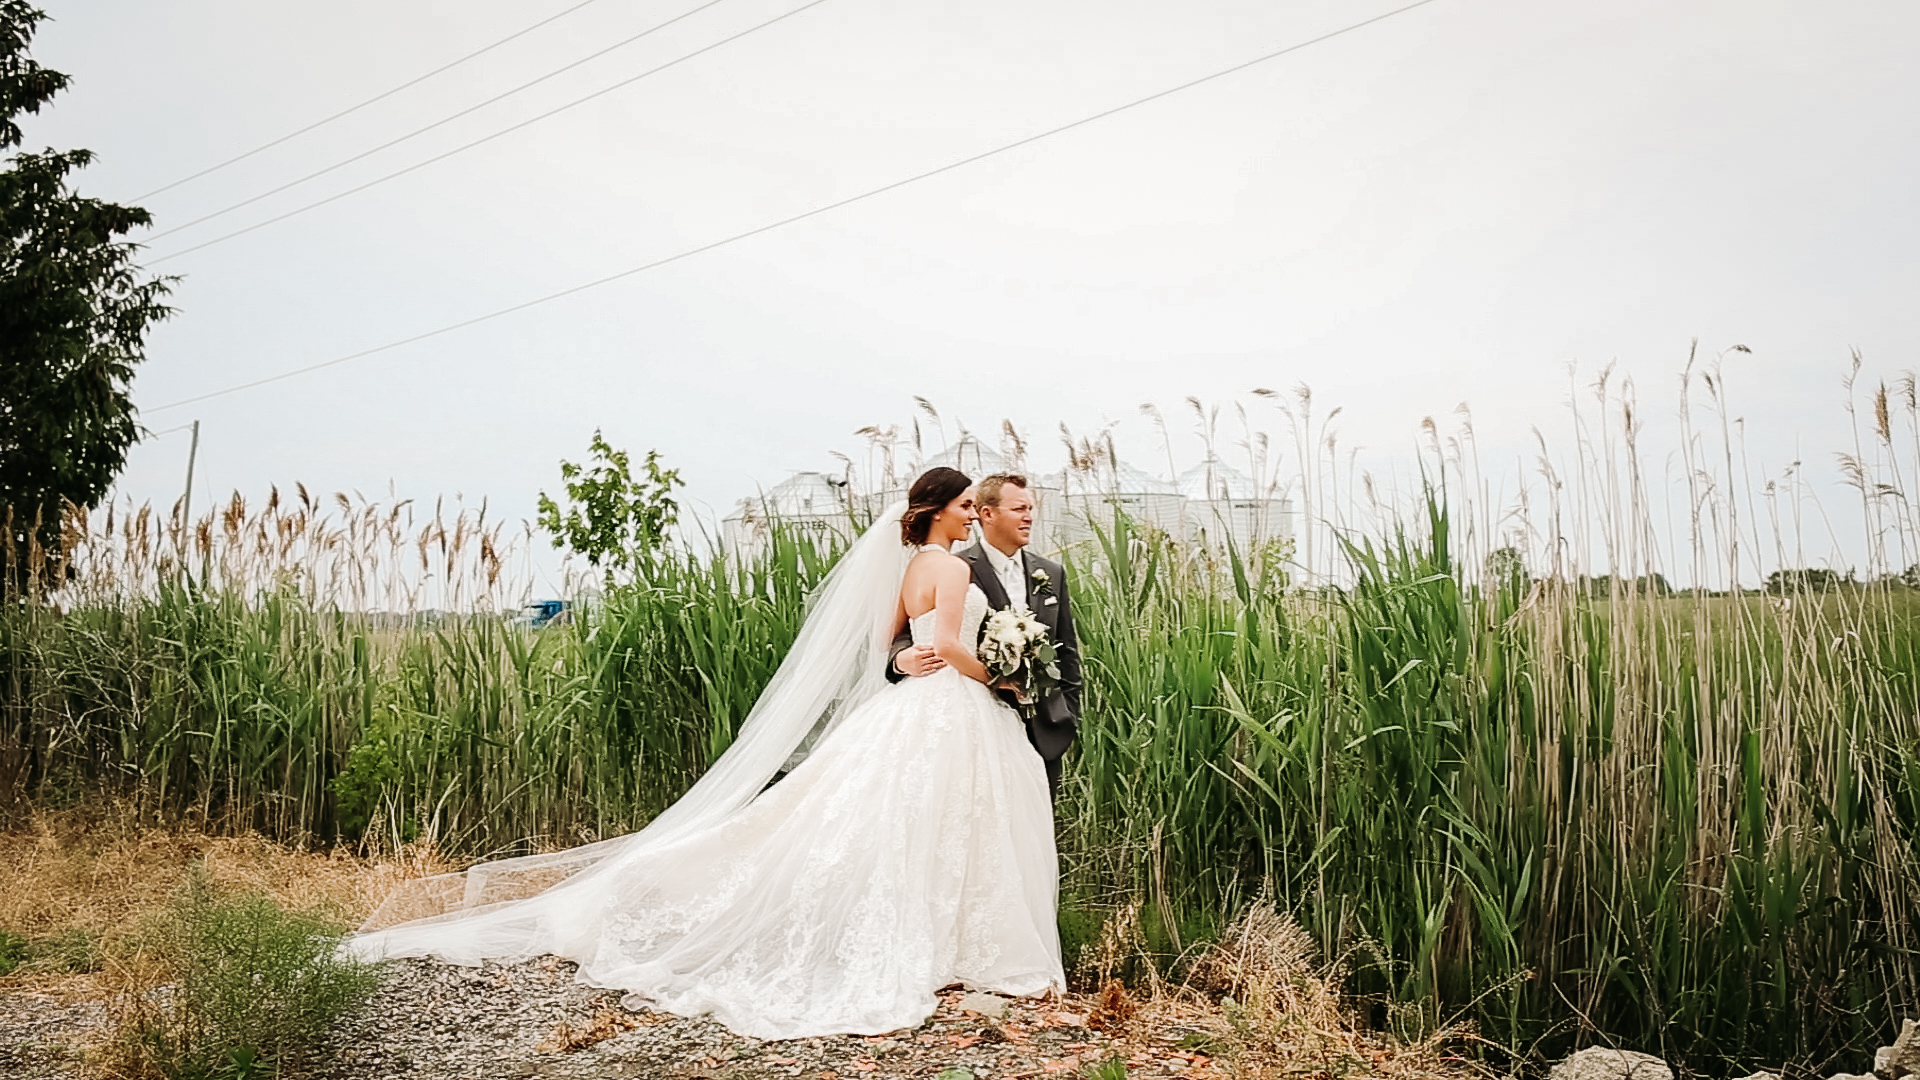 Brittany VanRuymbeke Photos + Films | Ontario Wedding Films | Wedding Videographer in Ontario